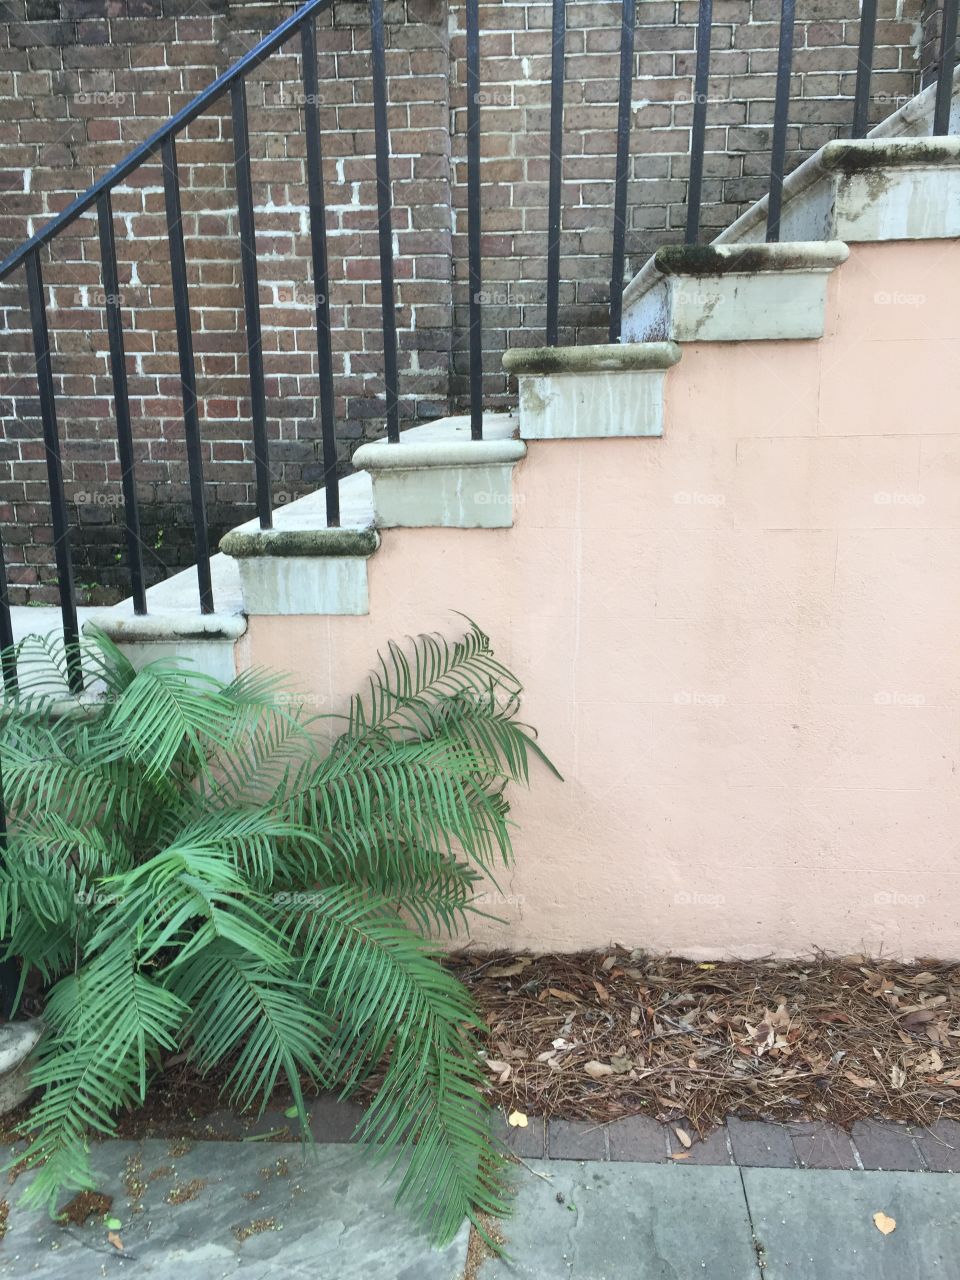 Stairs: College of Charleston, South Carolina